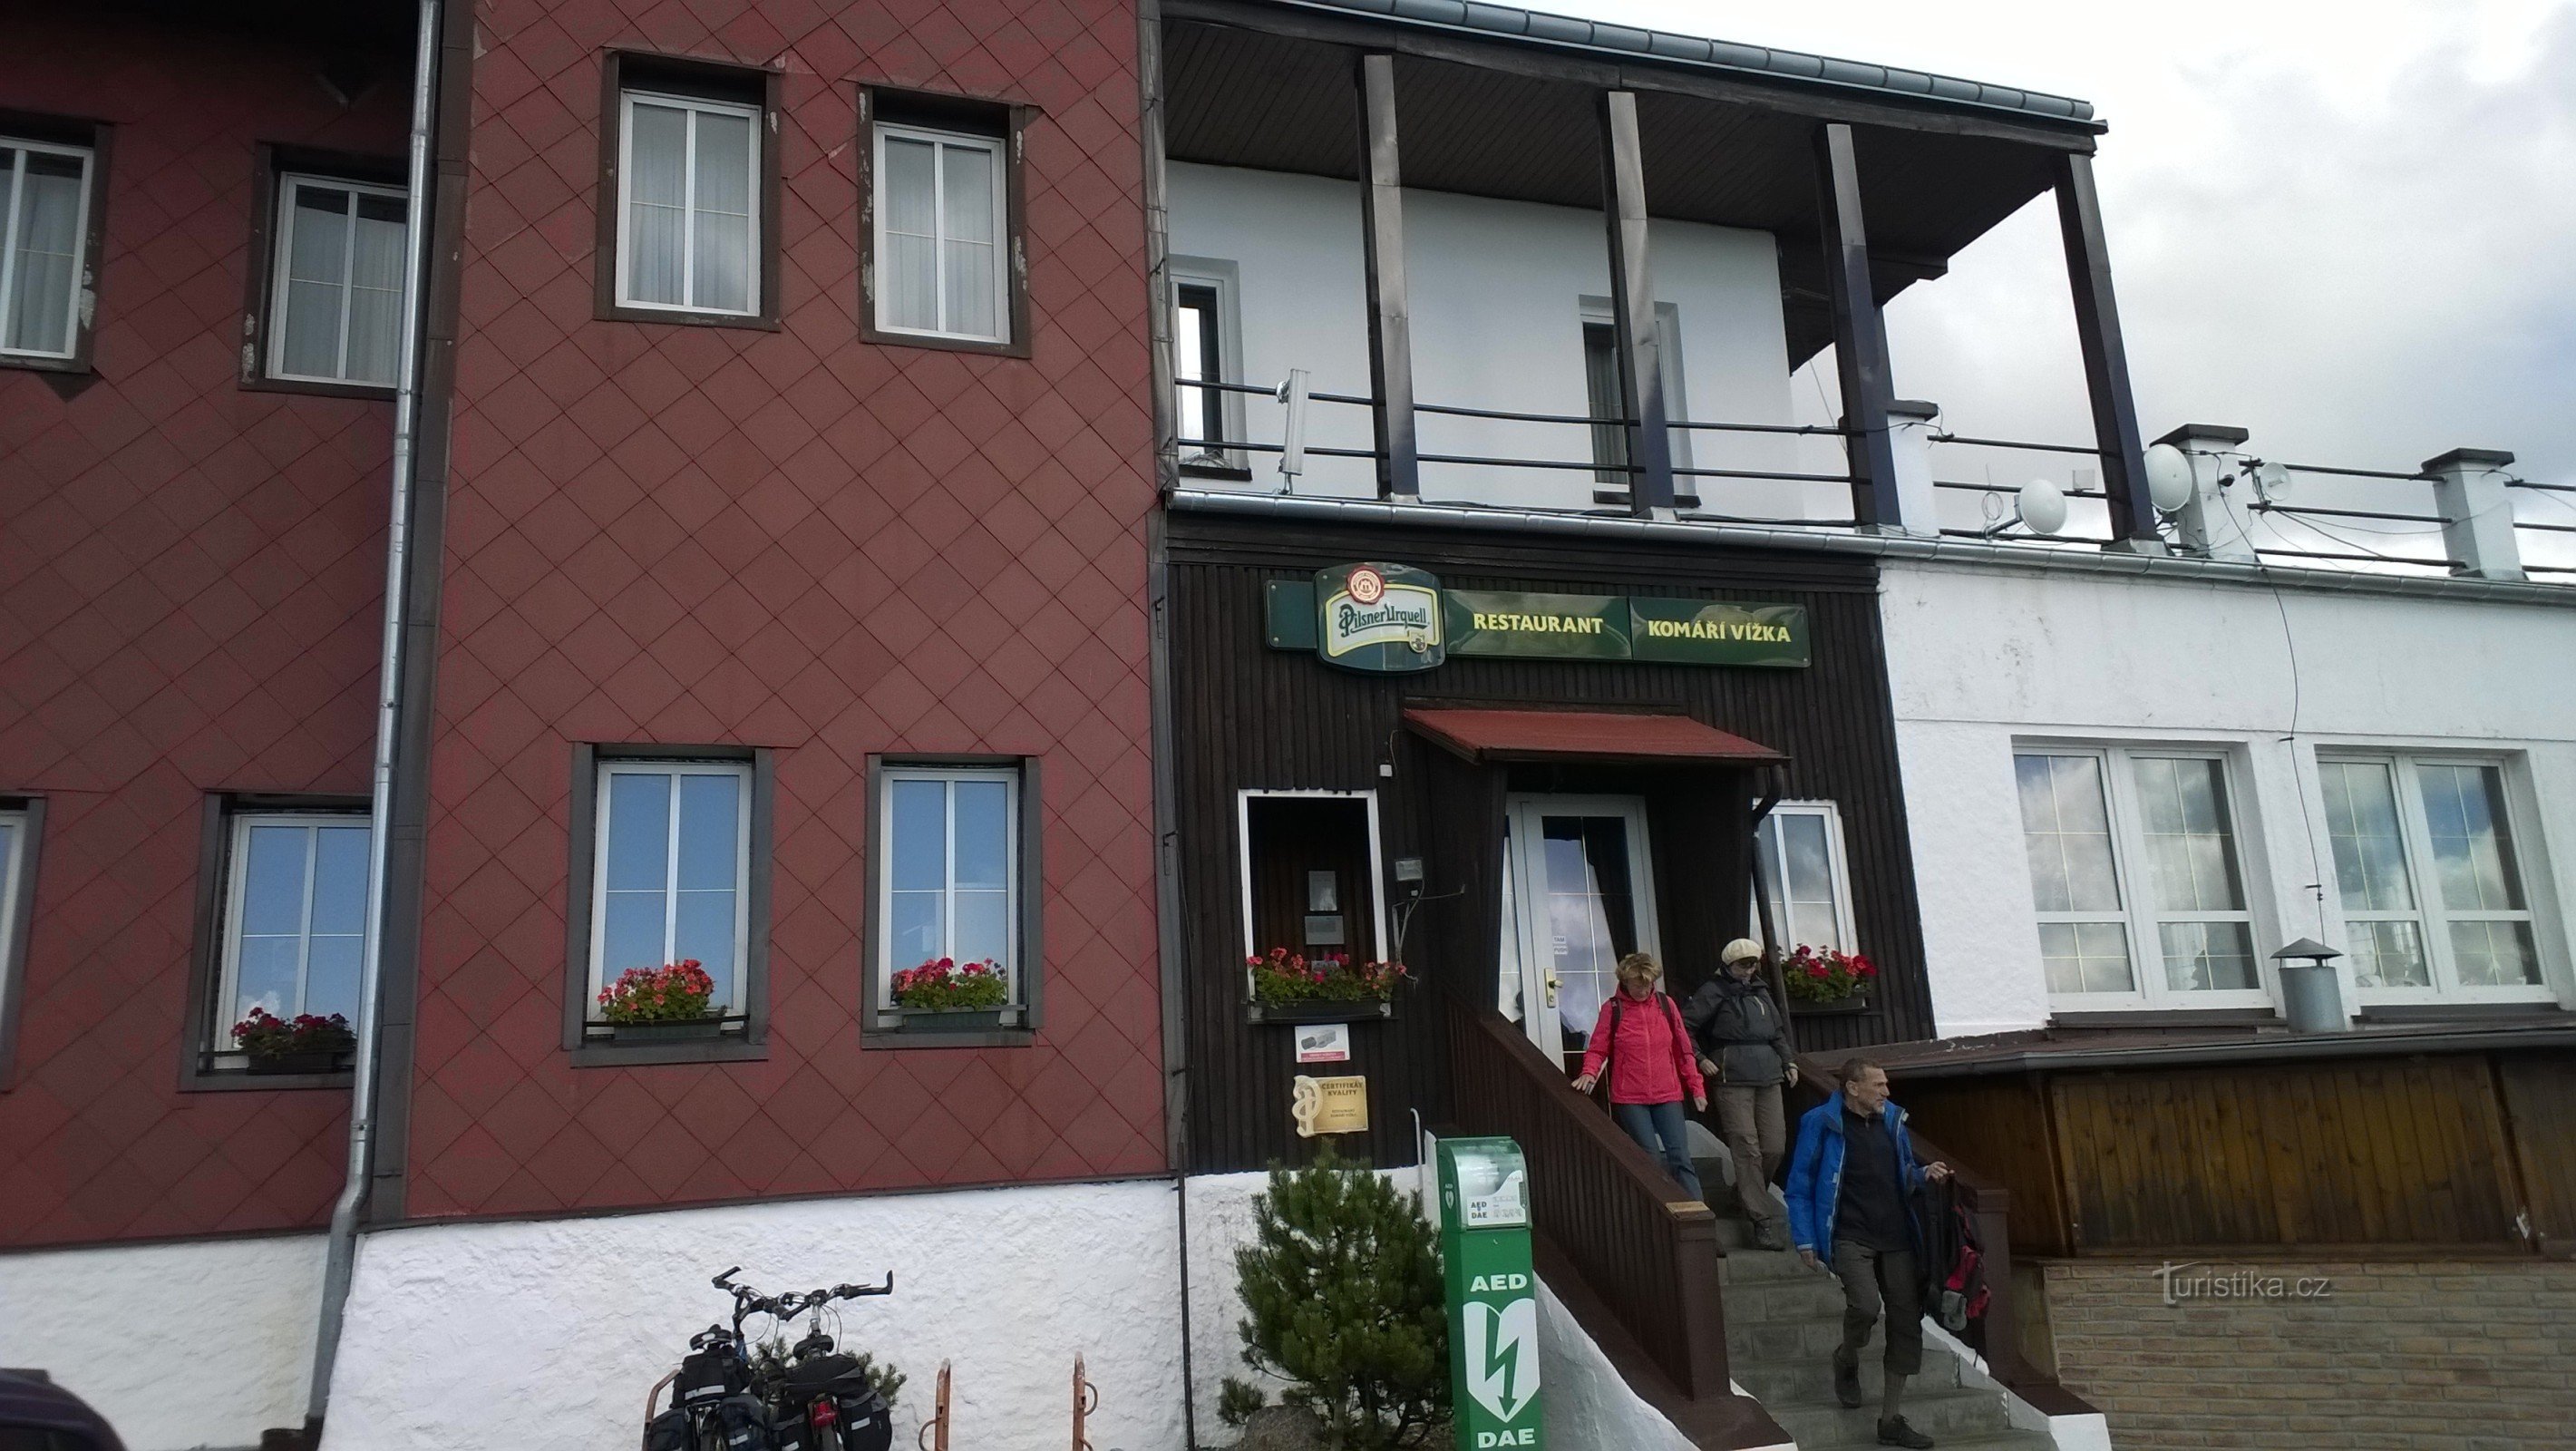 Restaurant på Komáří vižka.